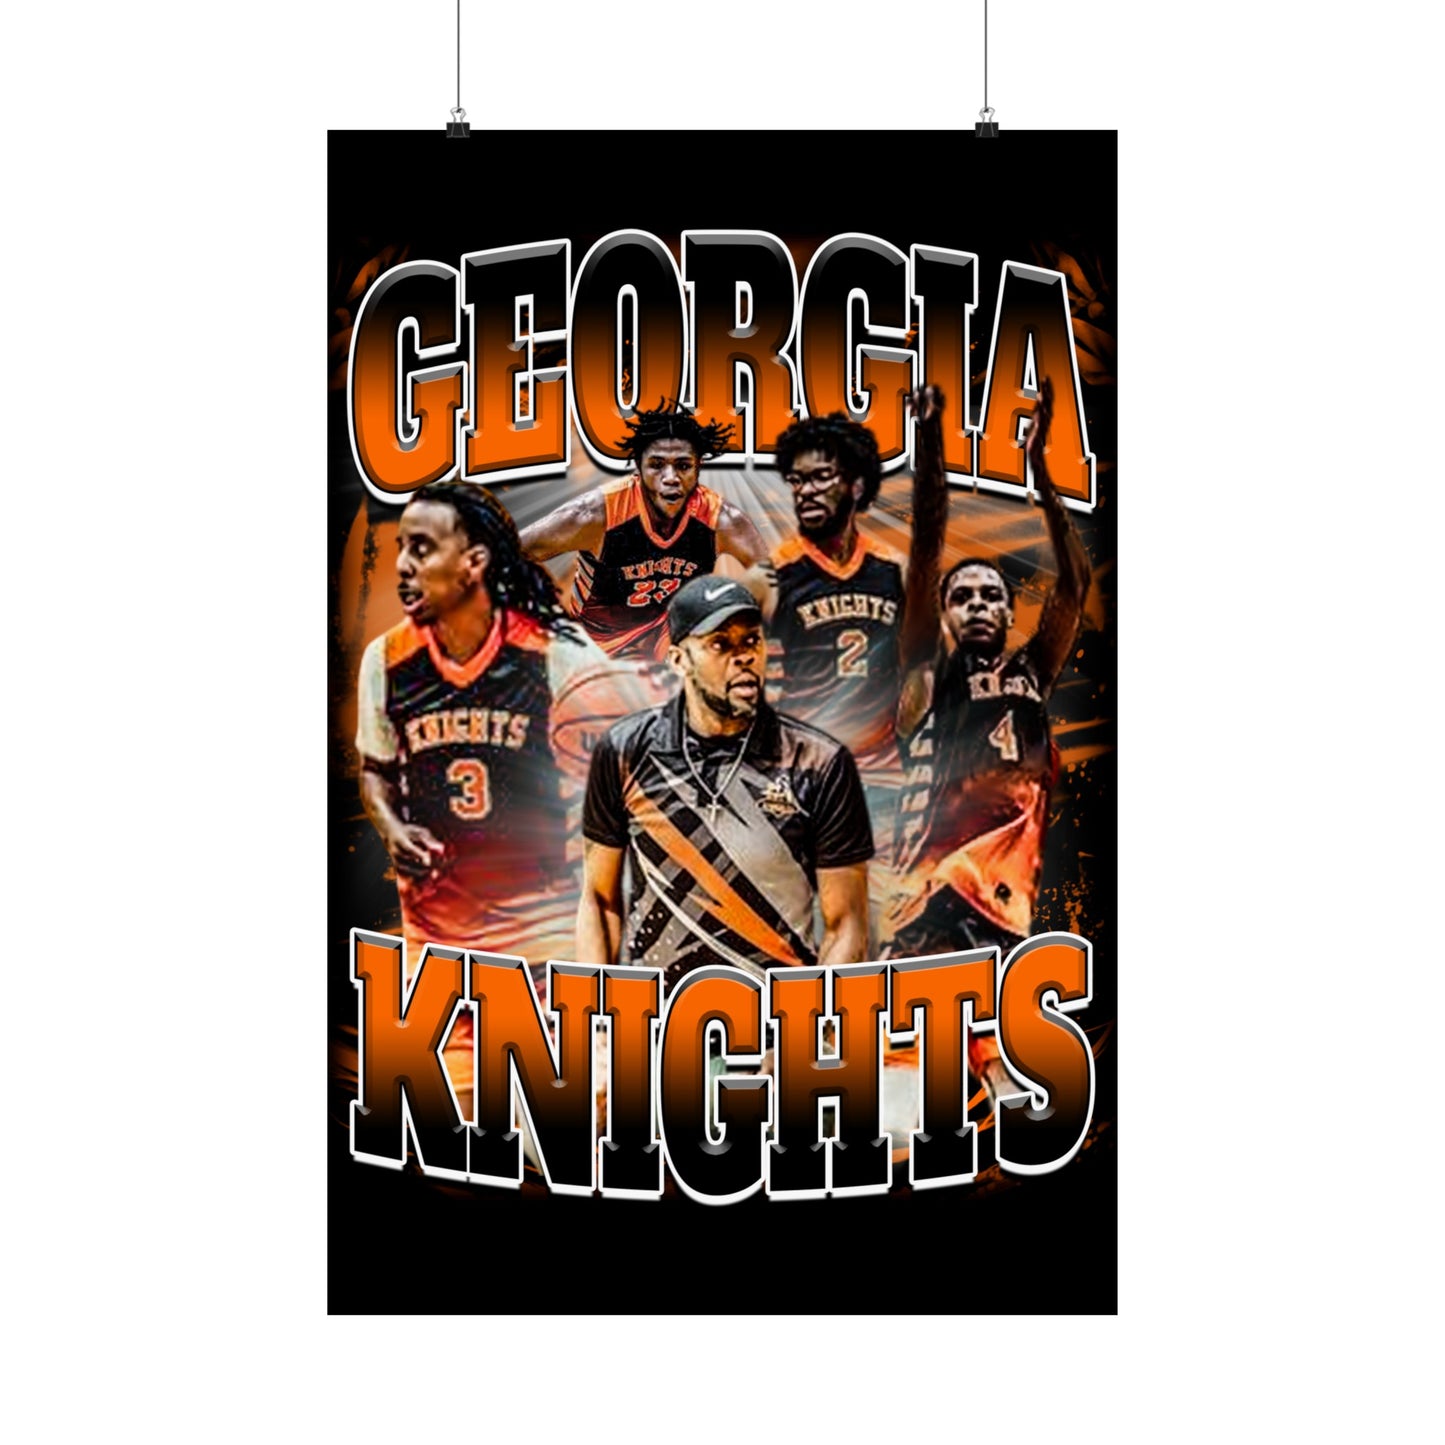 Georgia Knights Poster 24" x 36"